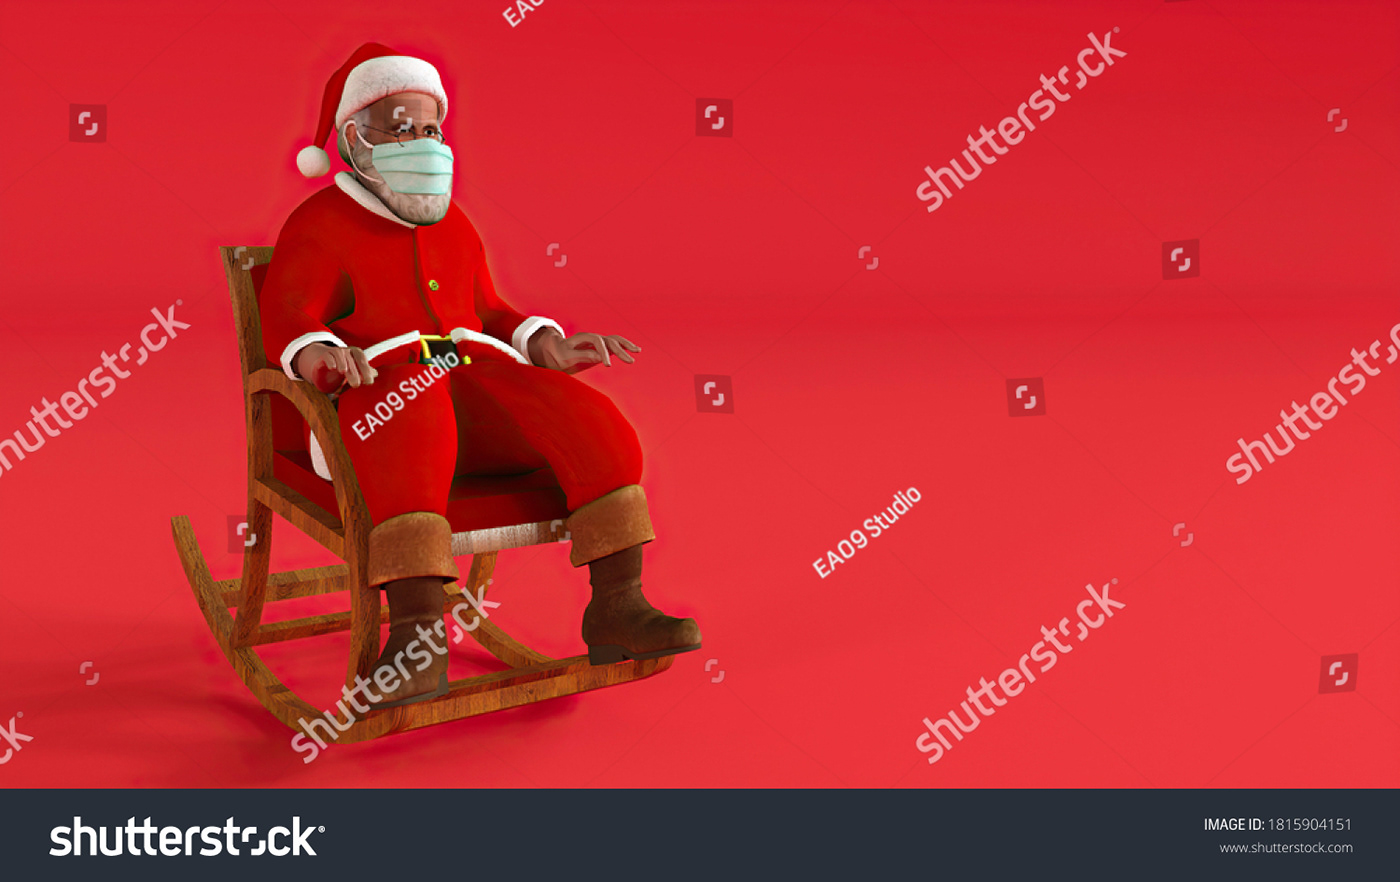 2021 New Year Christmas corona virus Covid 19 Holiday merry chrristmas Santa Claus xmas yeni il Новый год